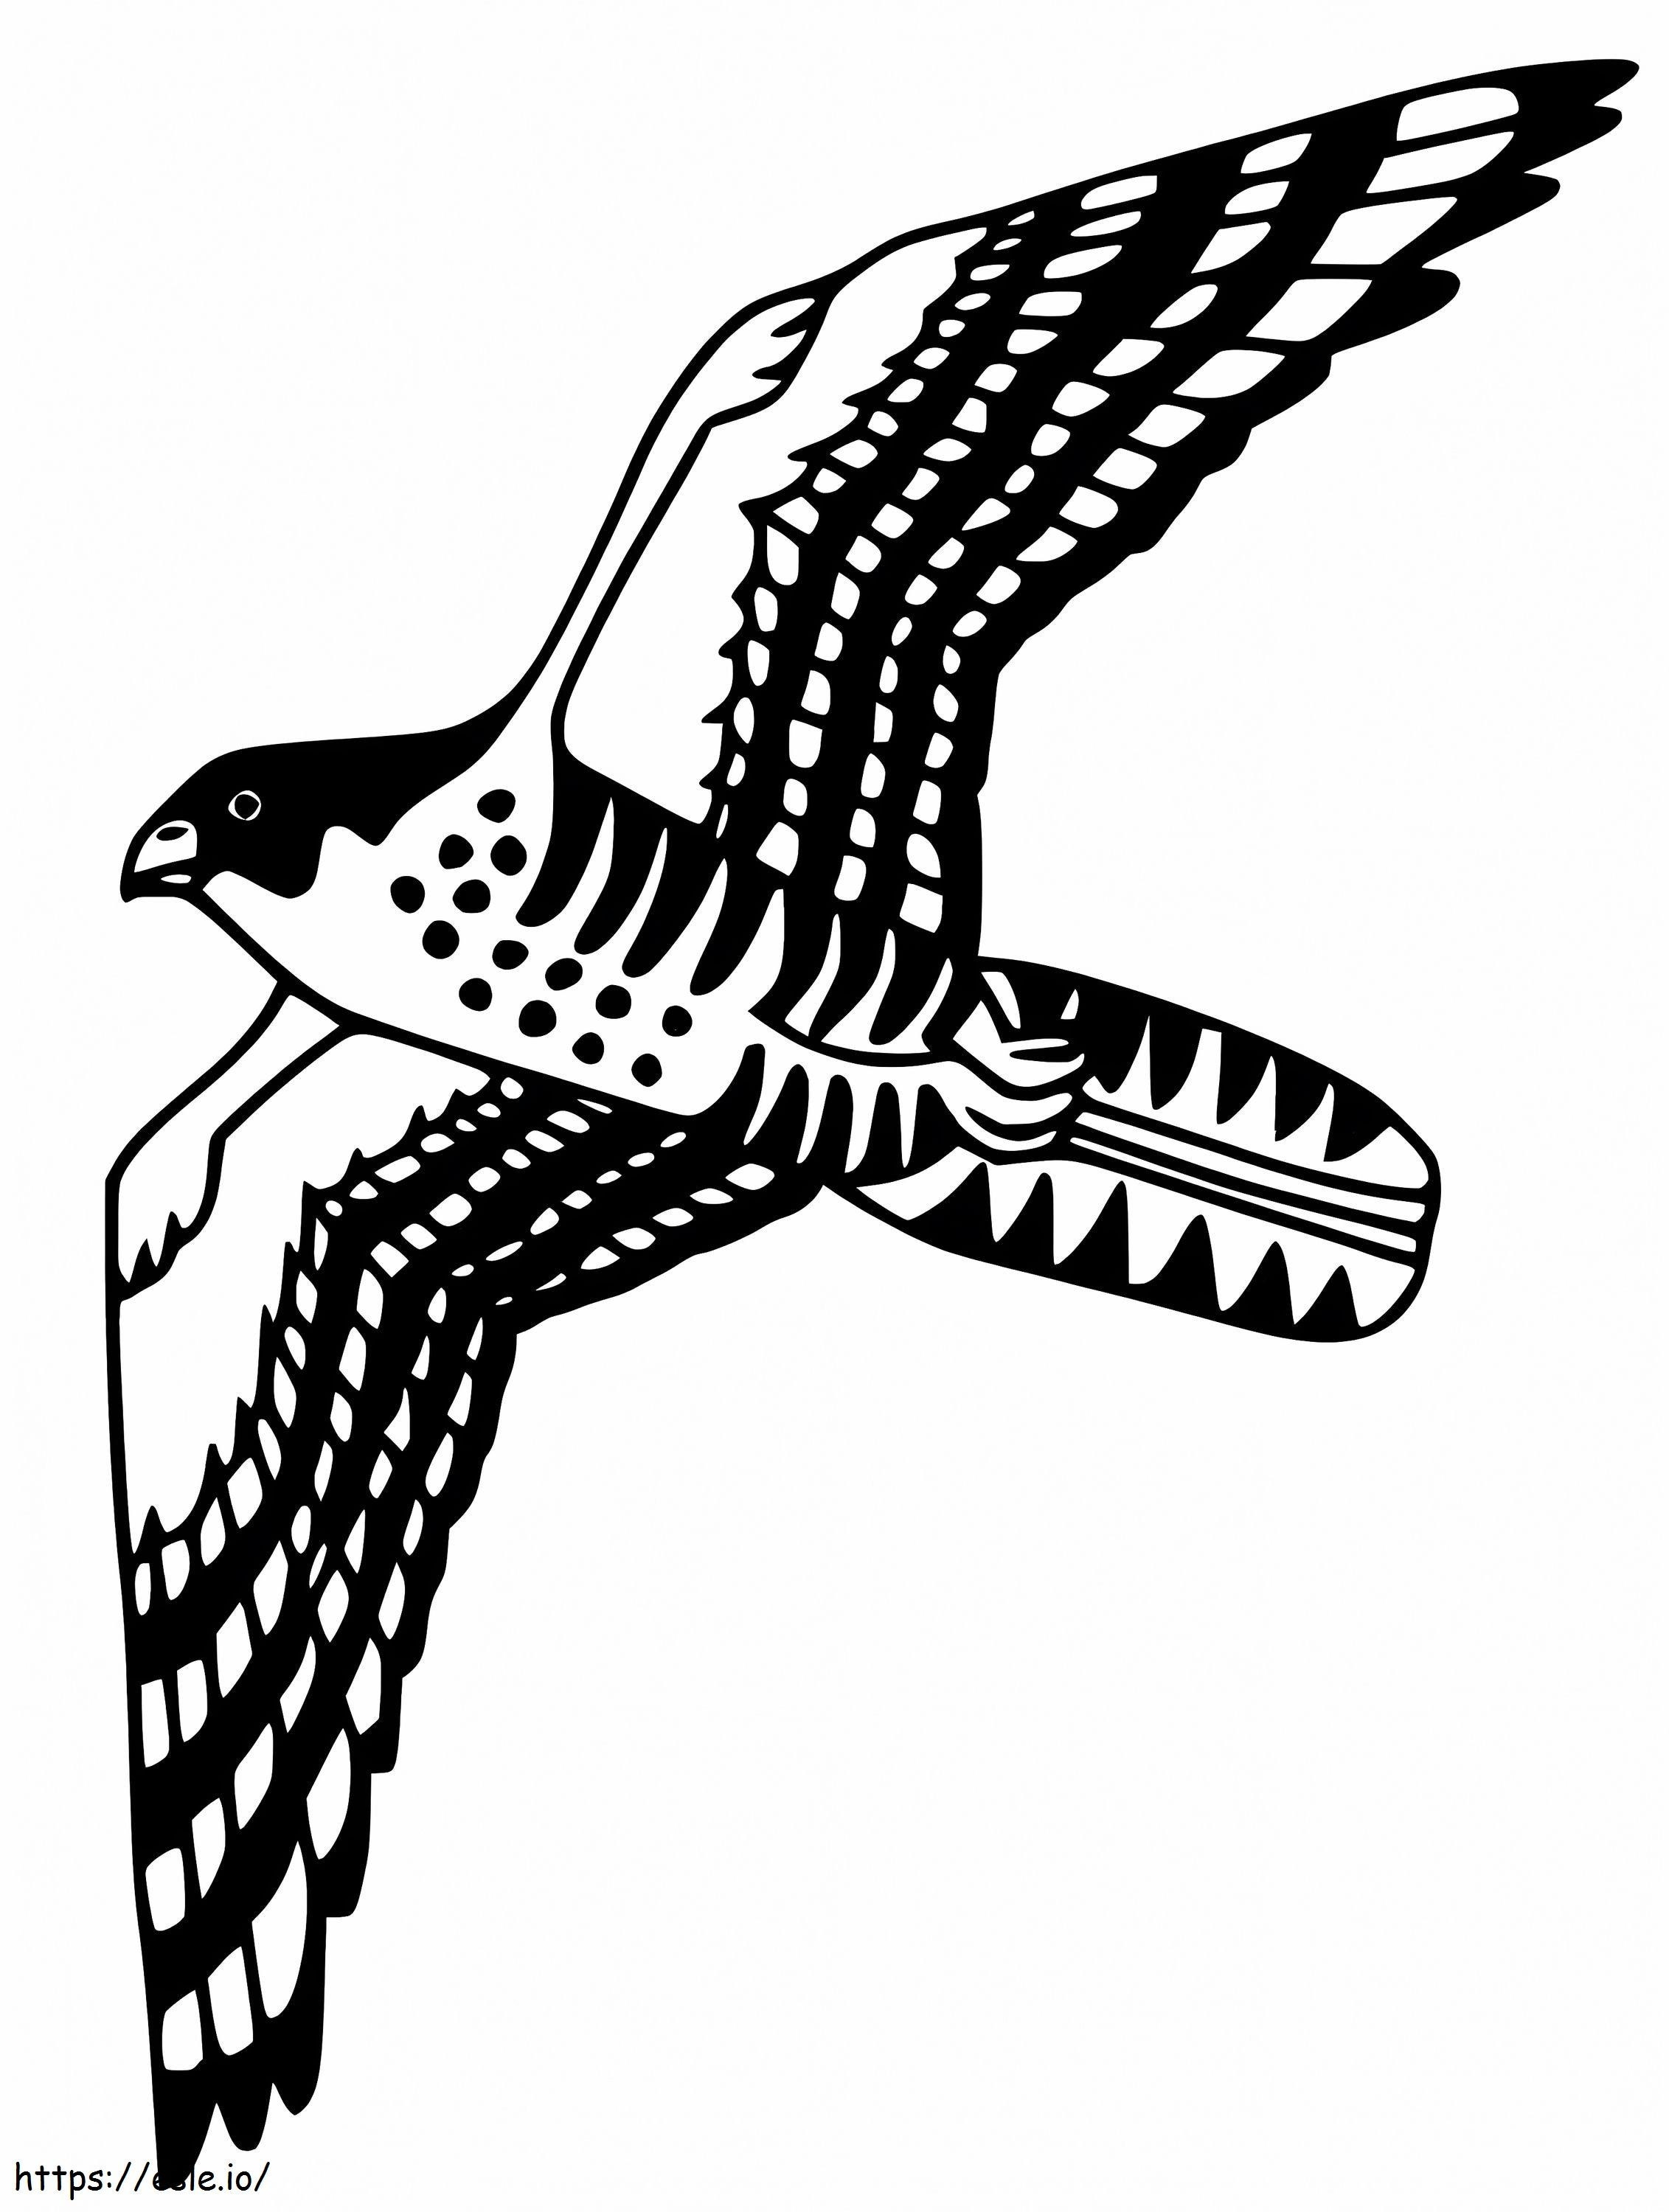 White Collared Kite Bird coloring page